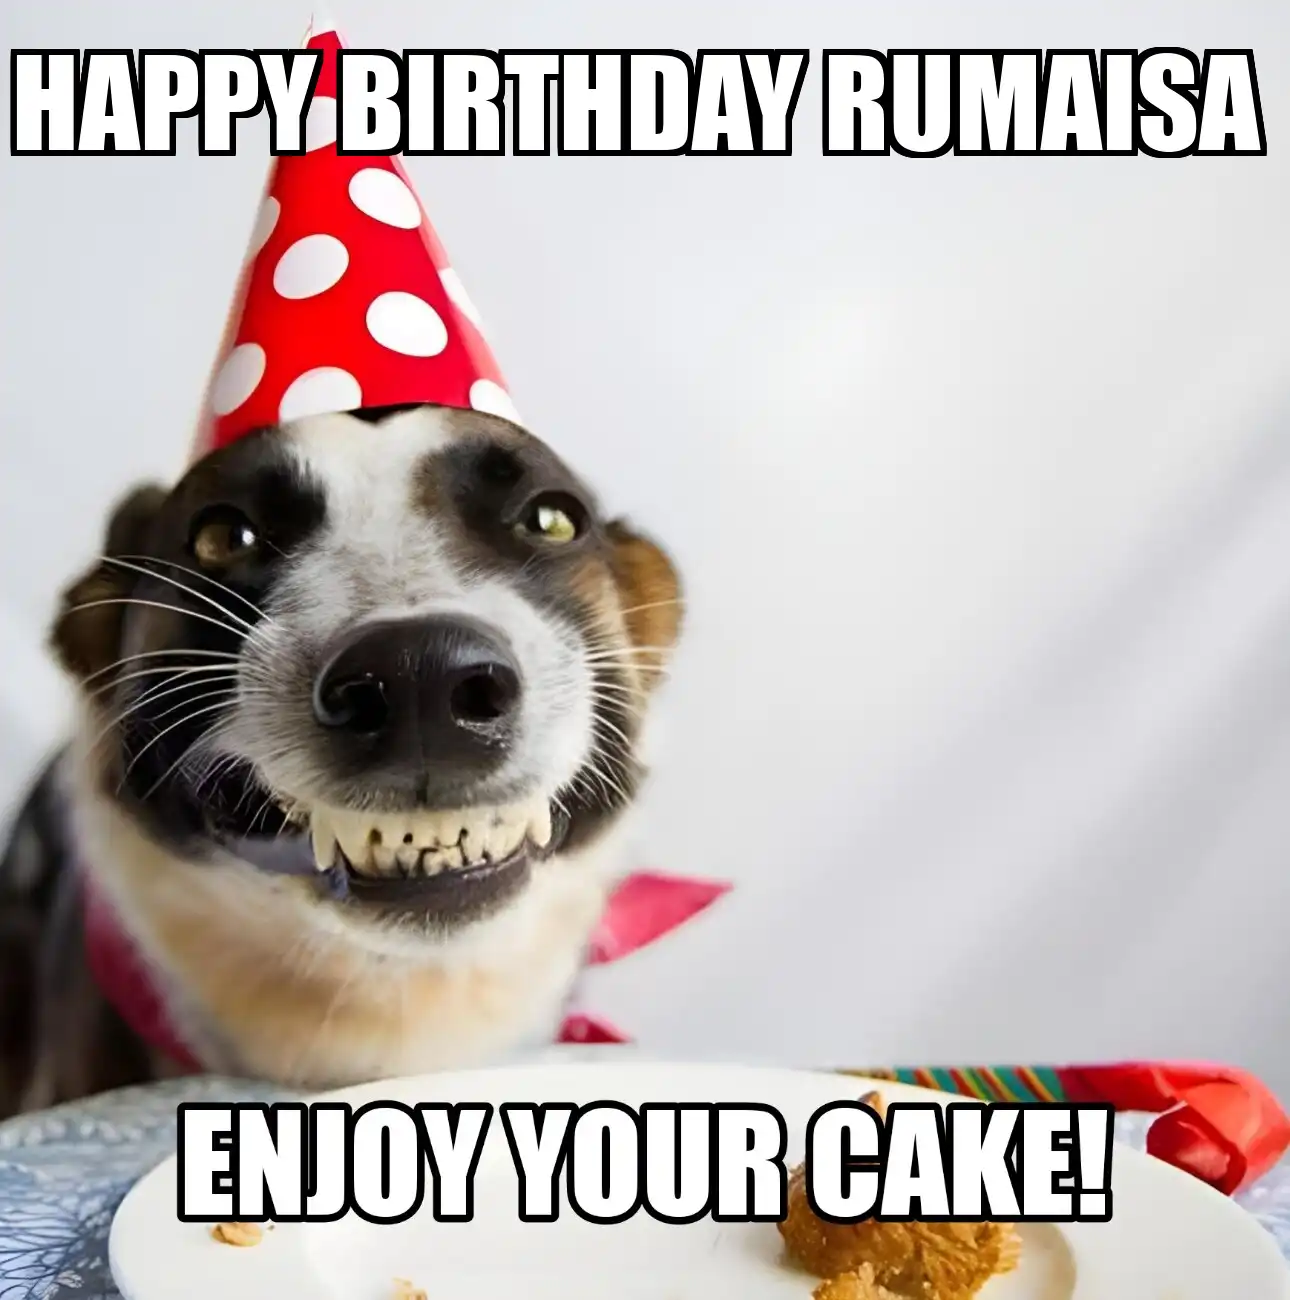 Happy Birthday Rumaisa Enjoy Your Cake Dog Meme